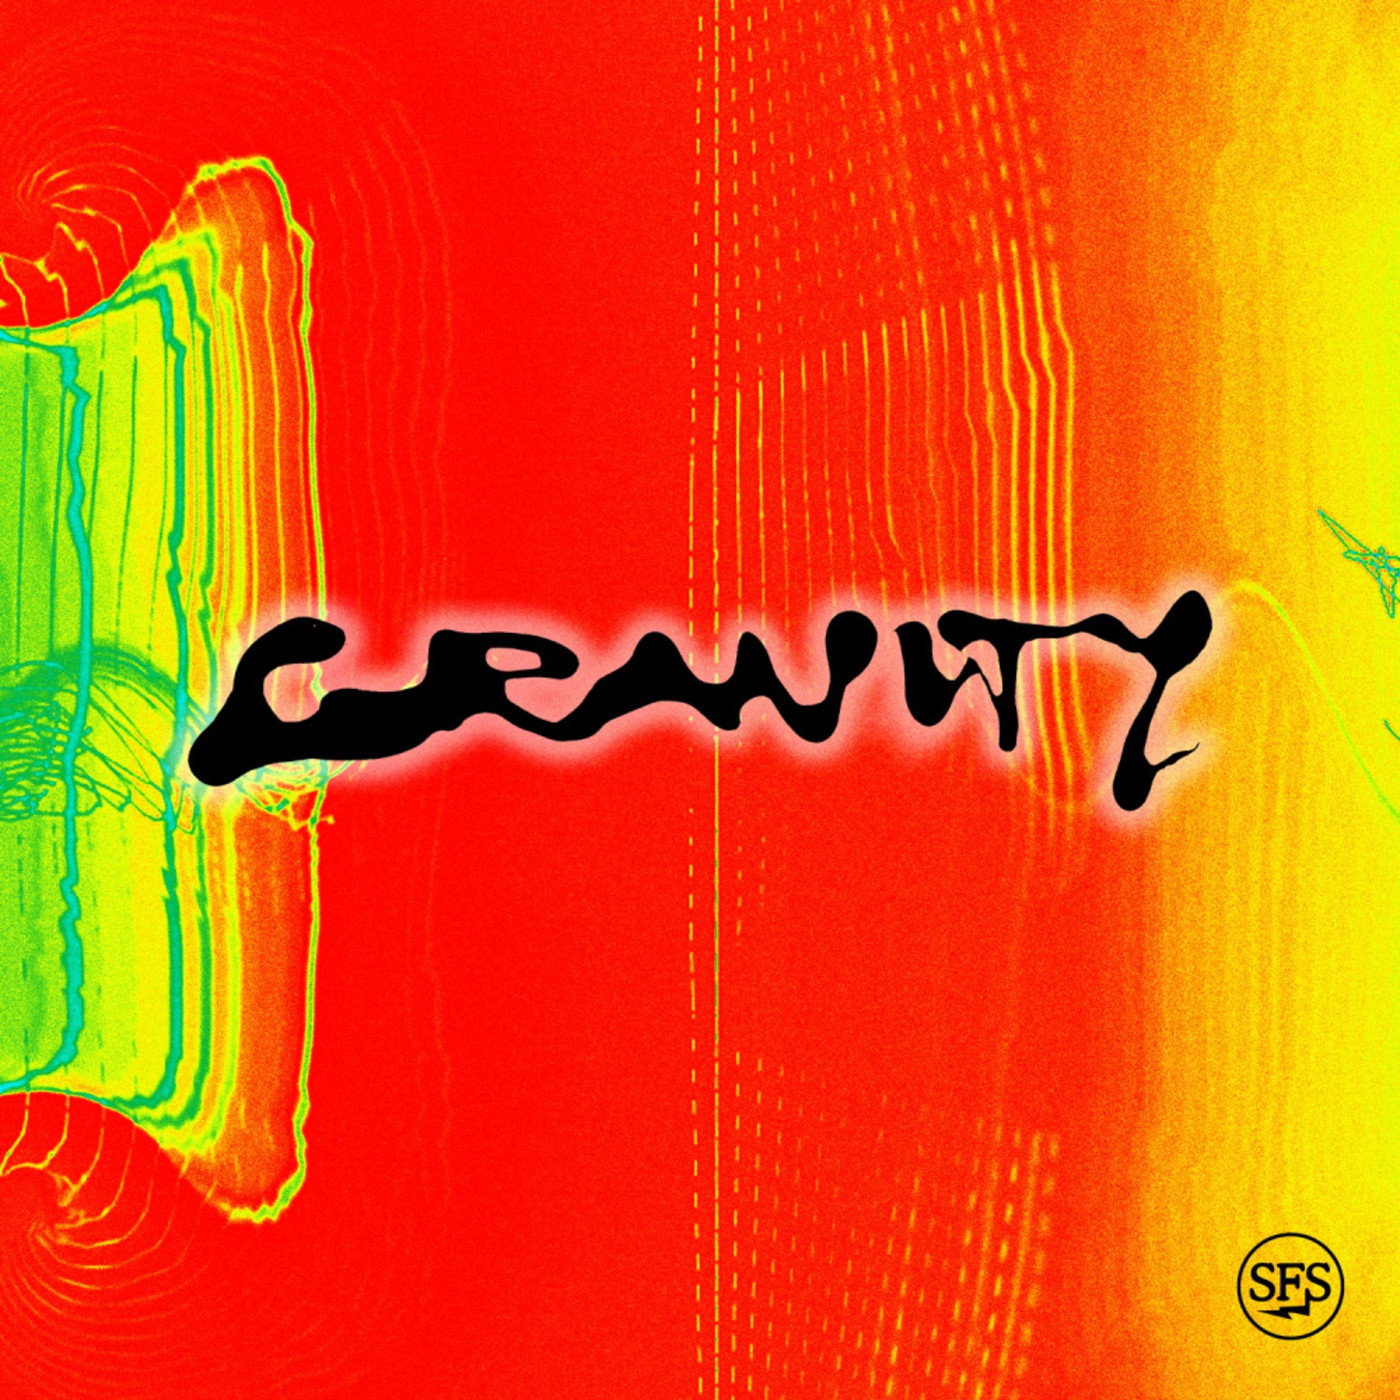 Tyler, the Creator Joins Brent Faiyaz and DJ Dahi on New Collab "Gravity"